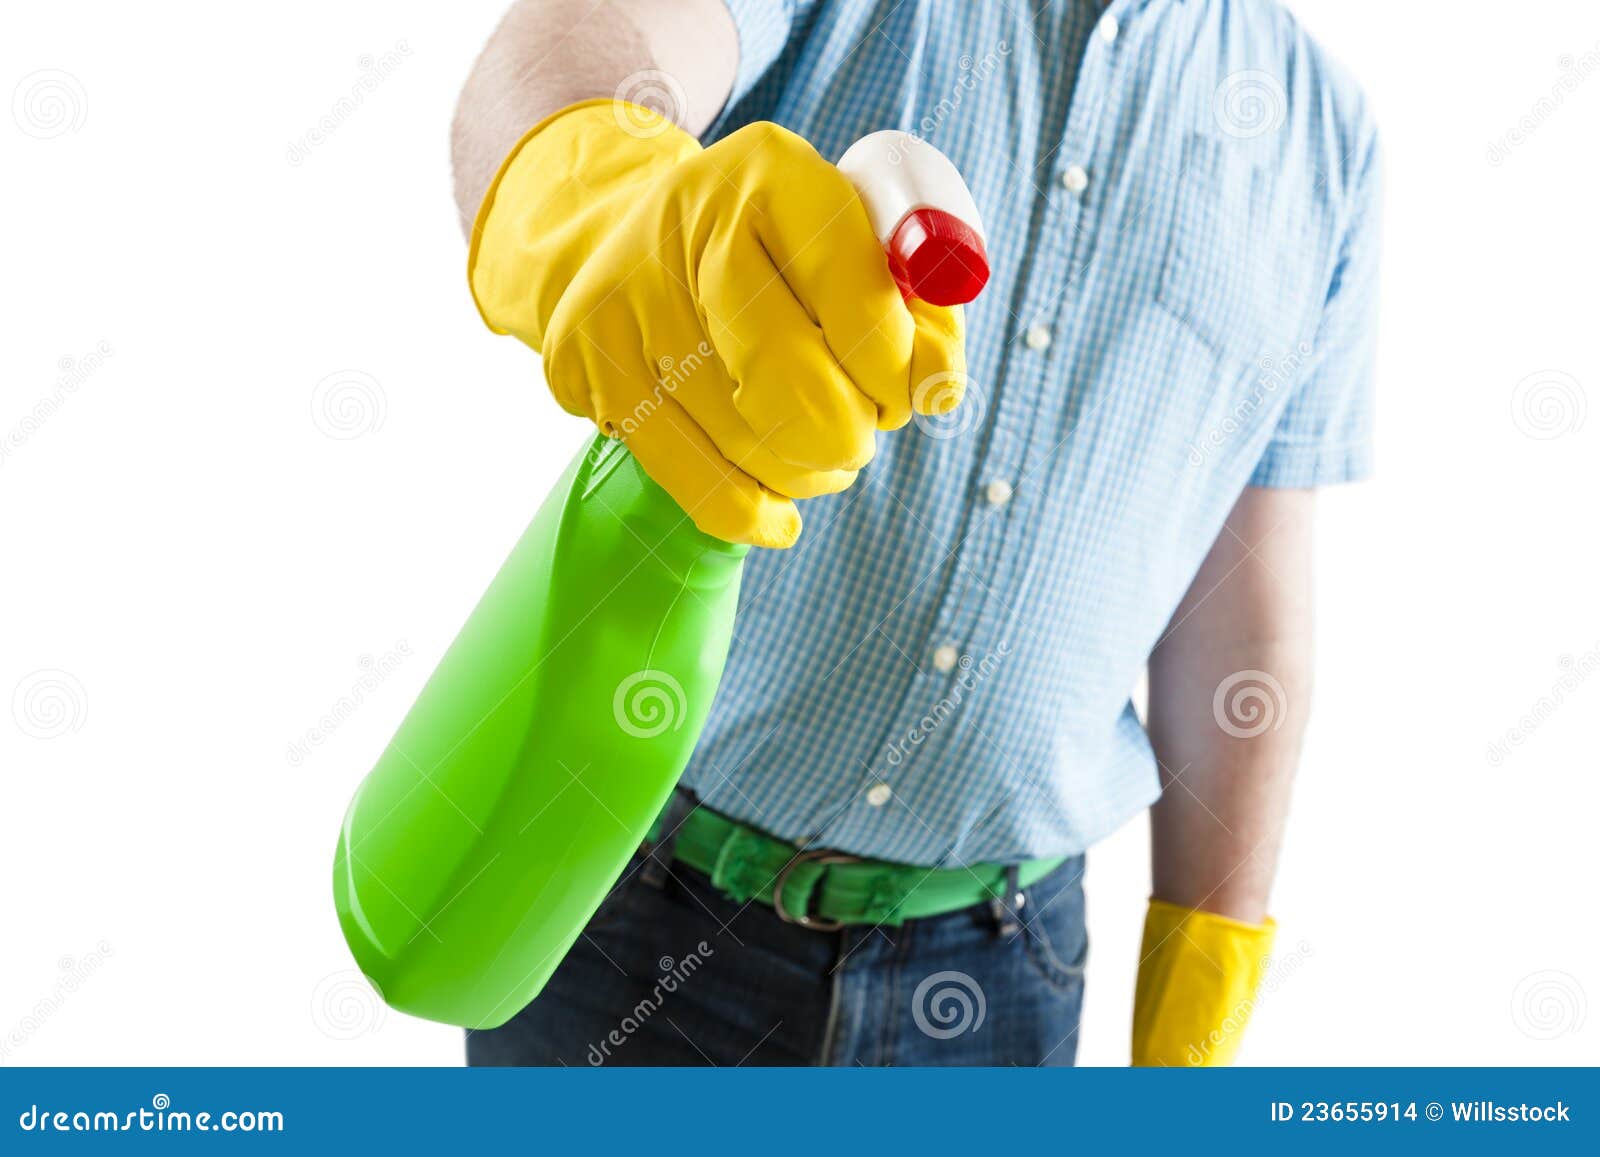 clipart man doing housework - photo #48